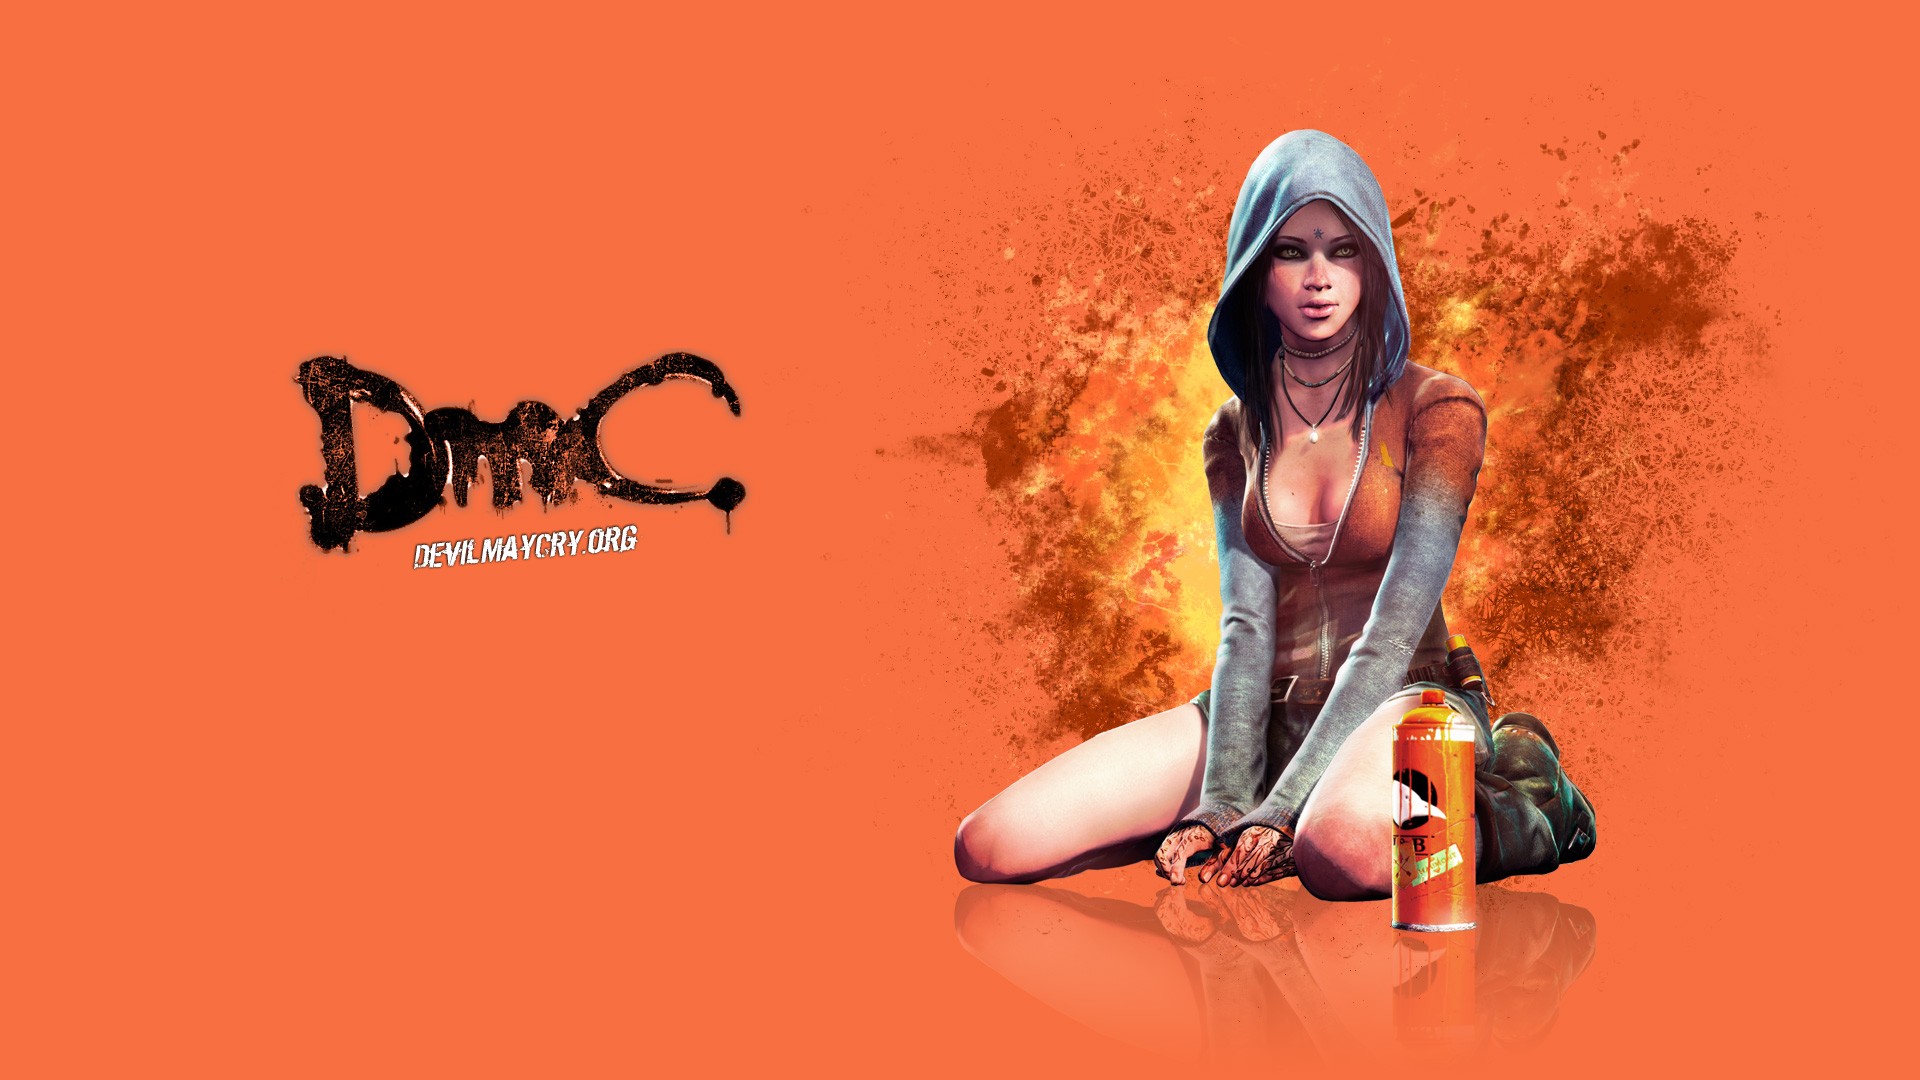 General 1920x1080 Kat video games DmC: Devil May Cry video game girls orange background hoods simple background video game art kneeling necklace cleavage